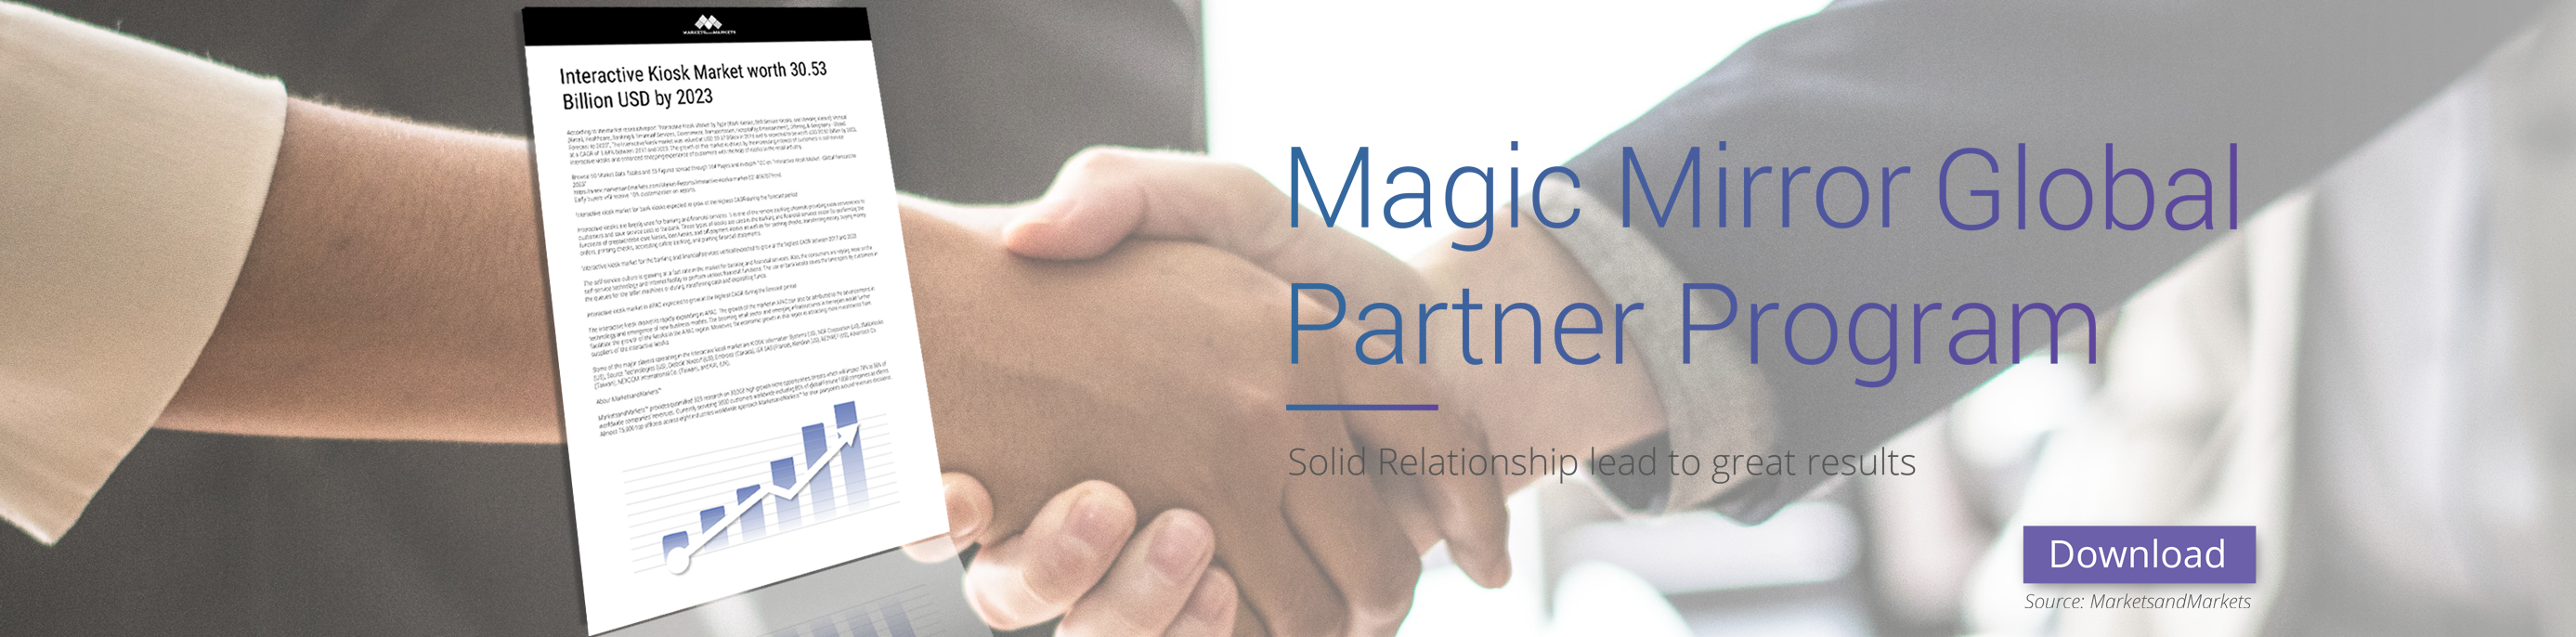 Magic Mirror Global Partner Program